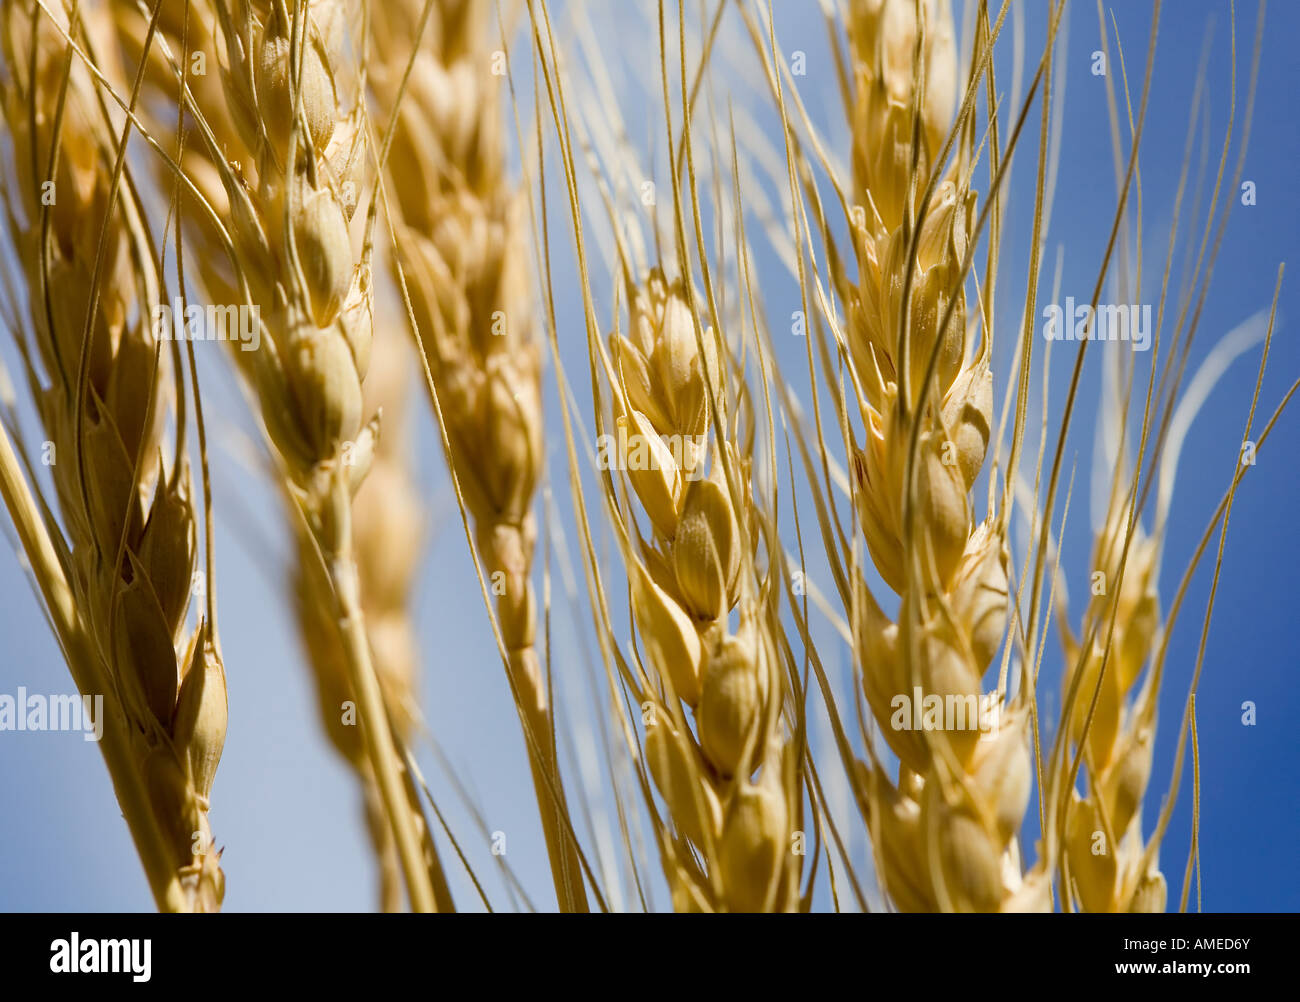 Les tiges de blé contre un ciel bleu Banque D'Images